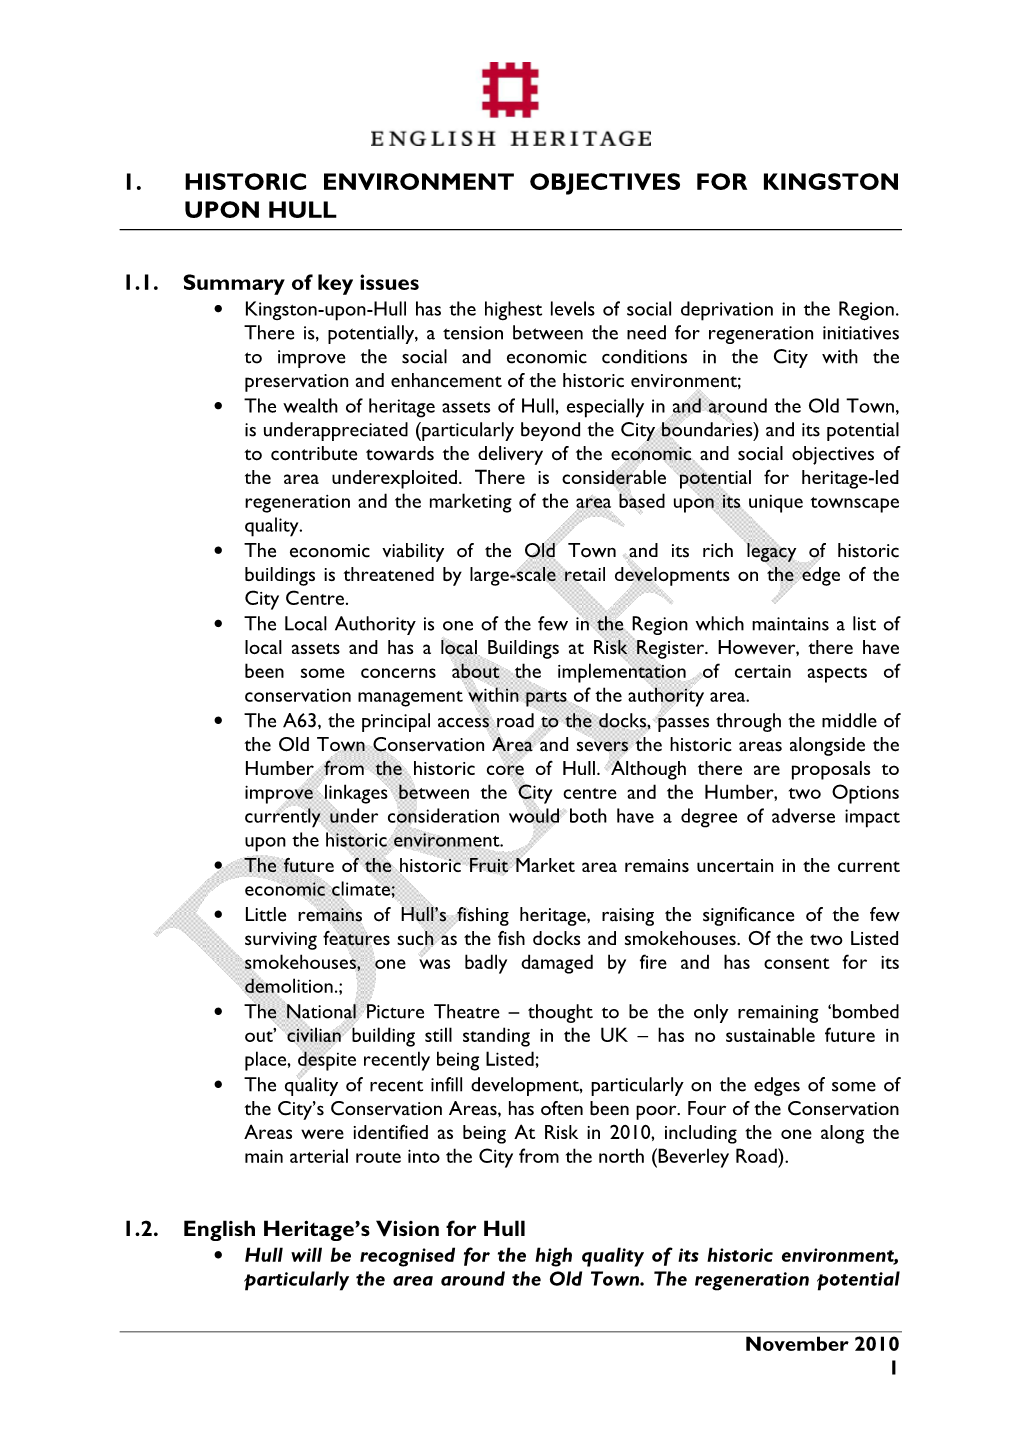 1. Historic Environment Objectives for Kingston Upon Hull